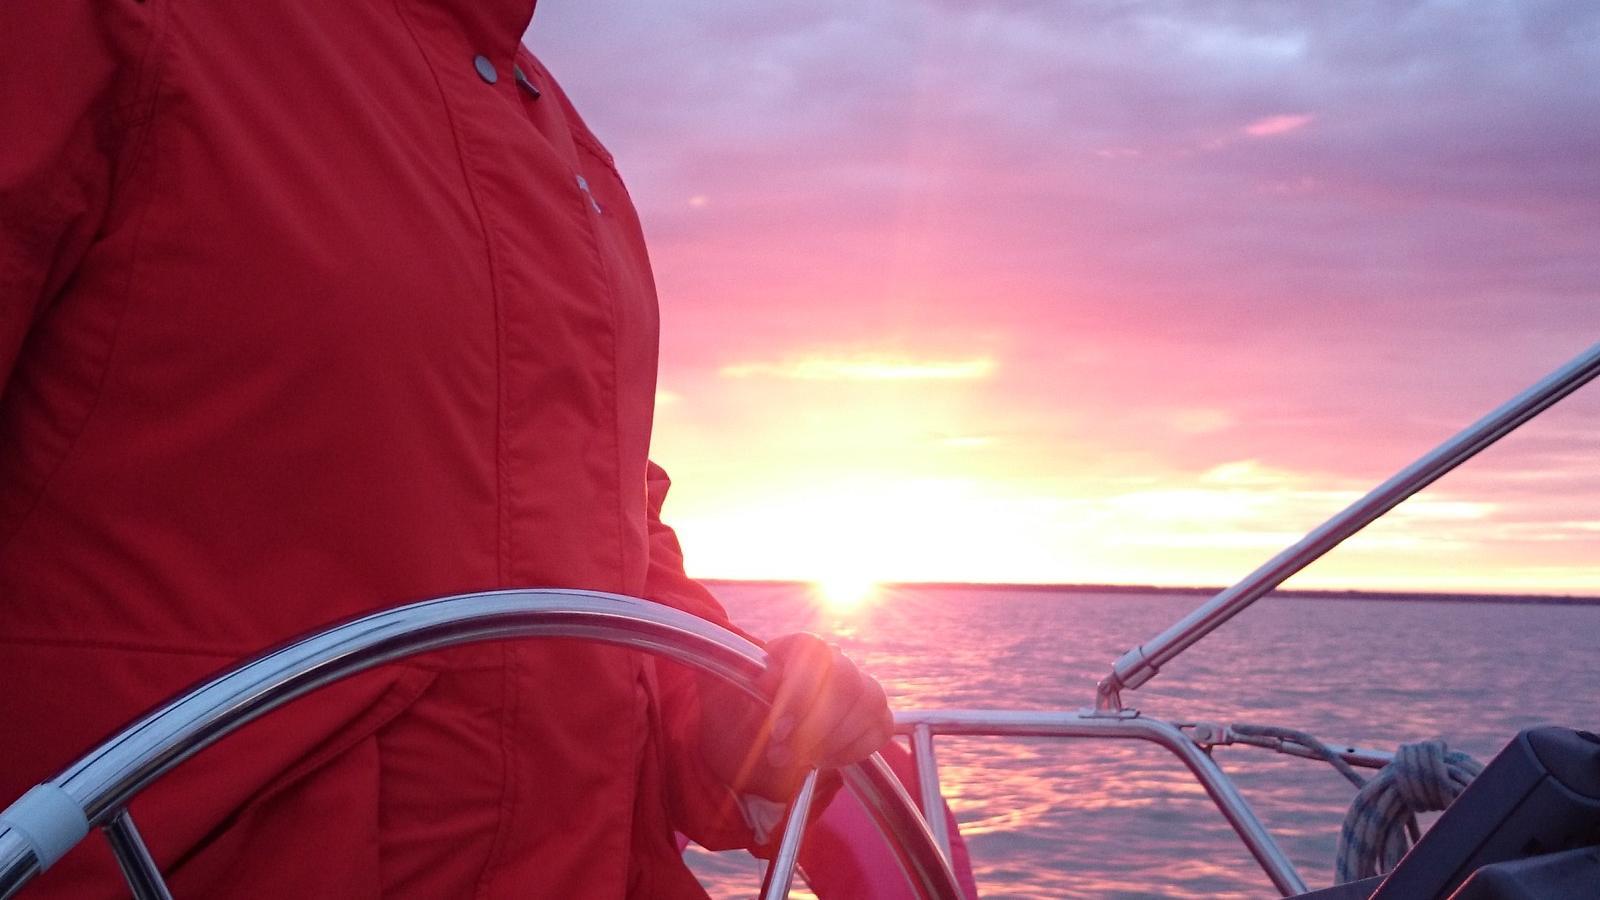 Sailing to Kihnu island with Seikle Vabaks; wonderful sunsets